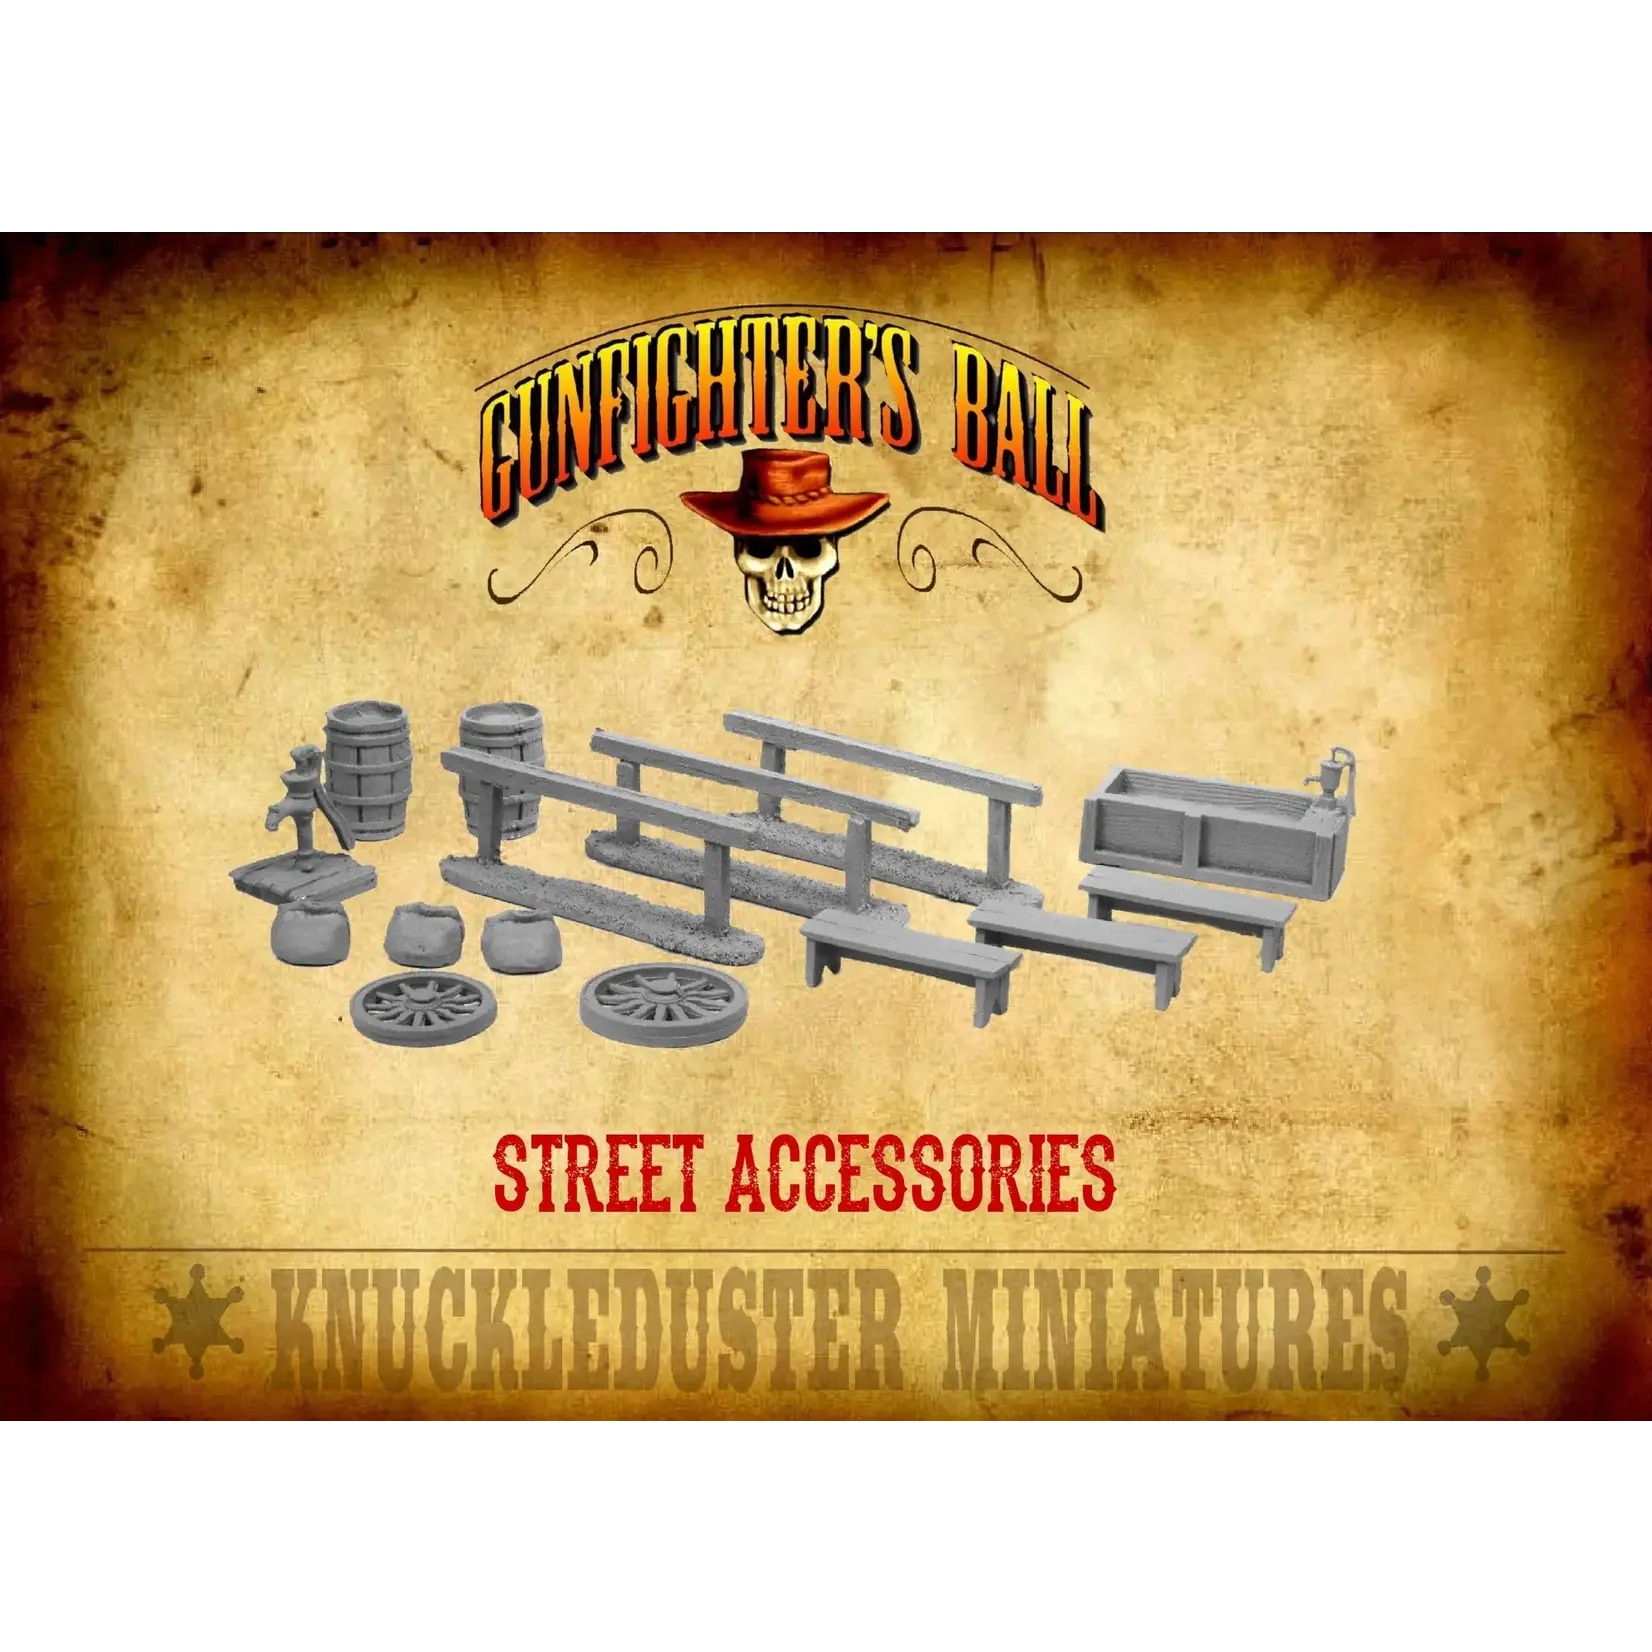 Knuckleduster Miniatures Street Accessories